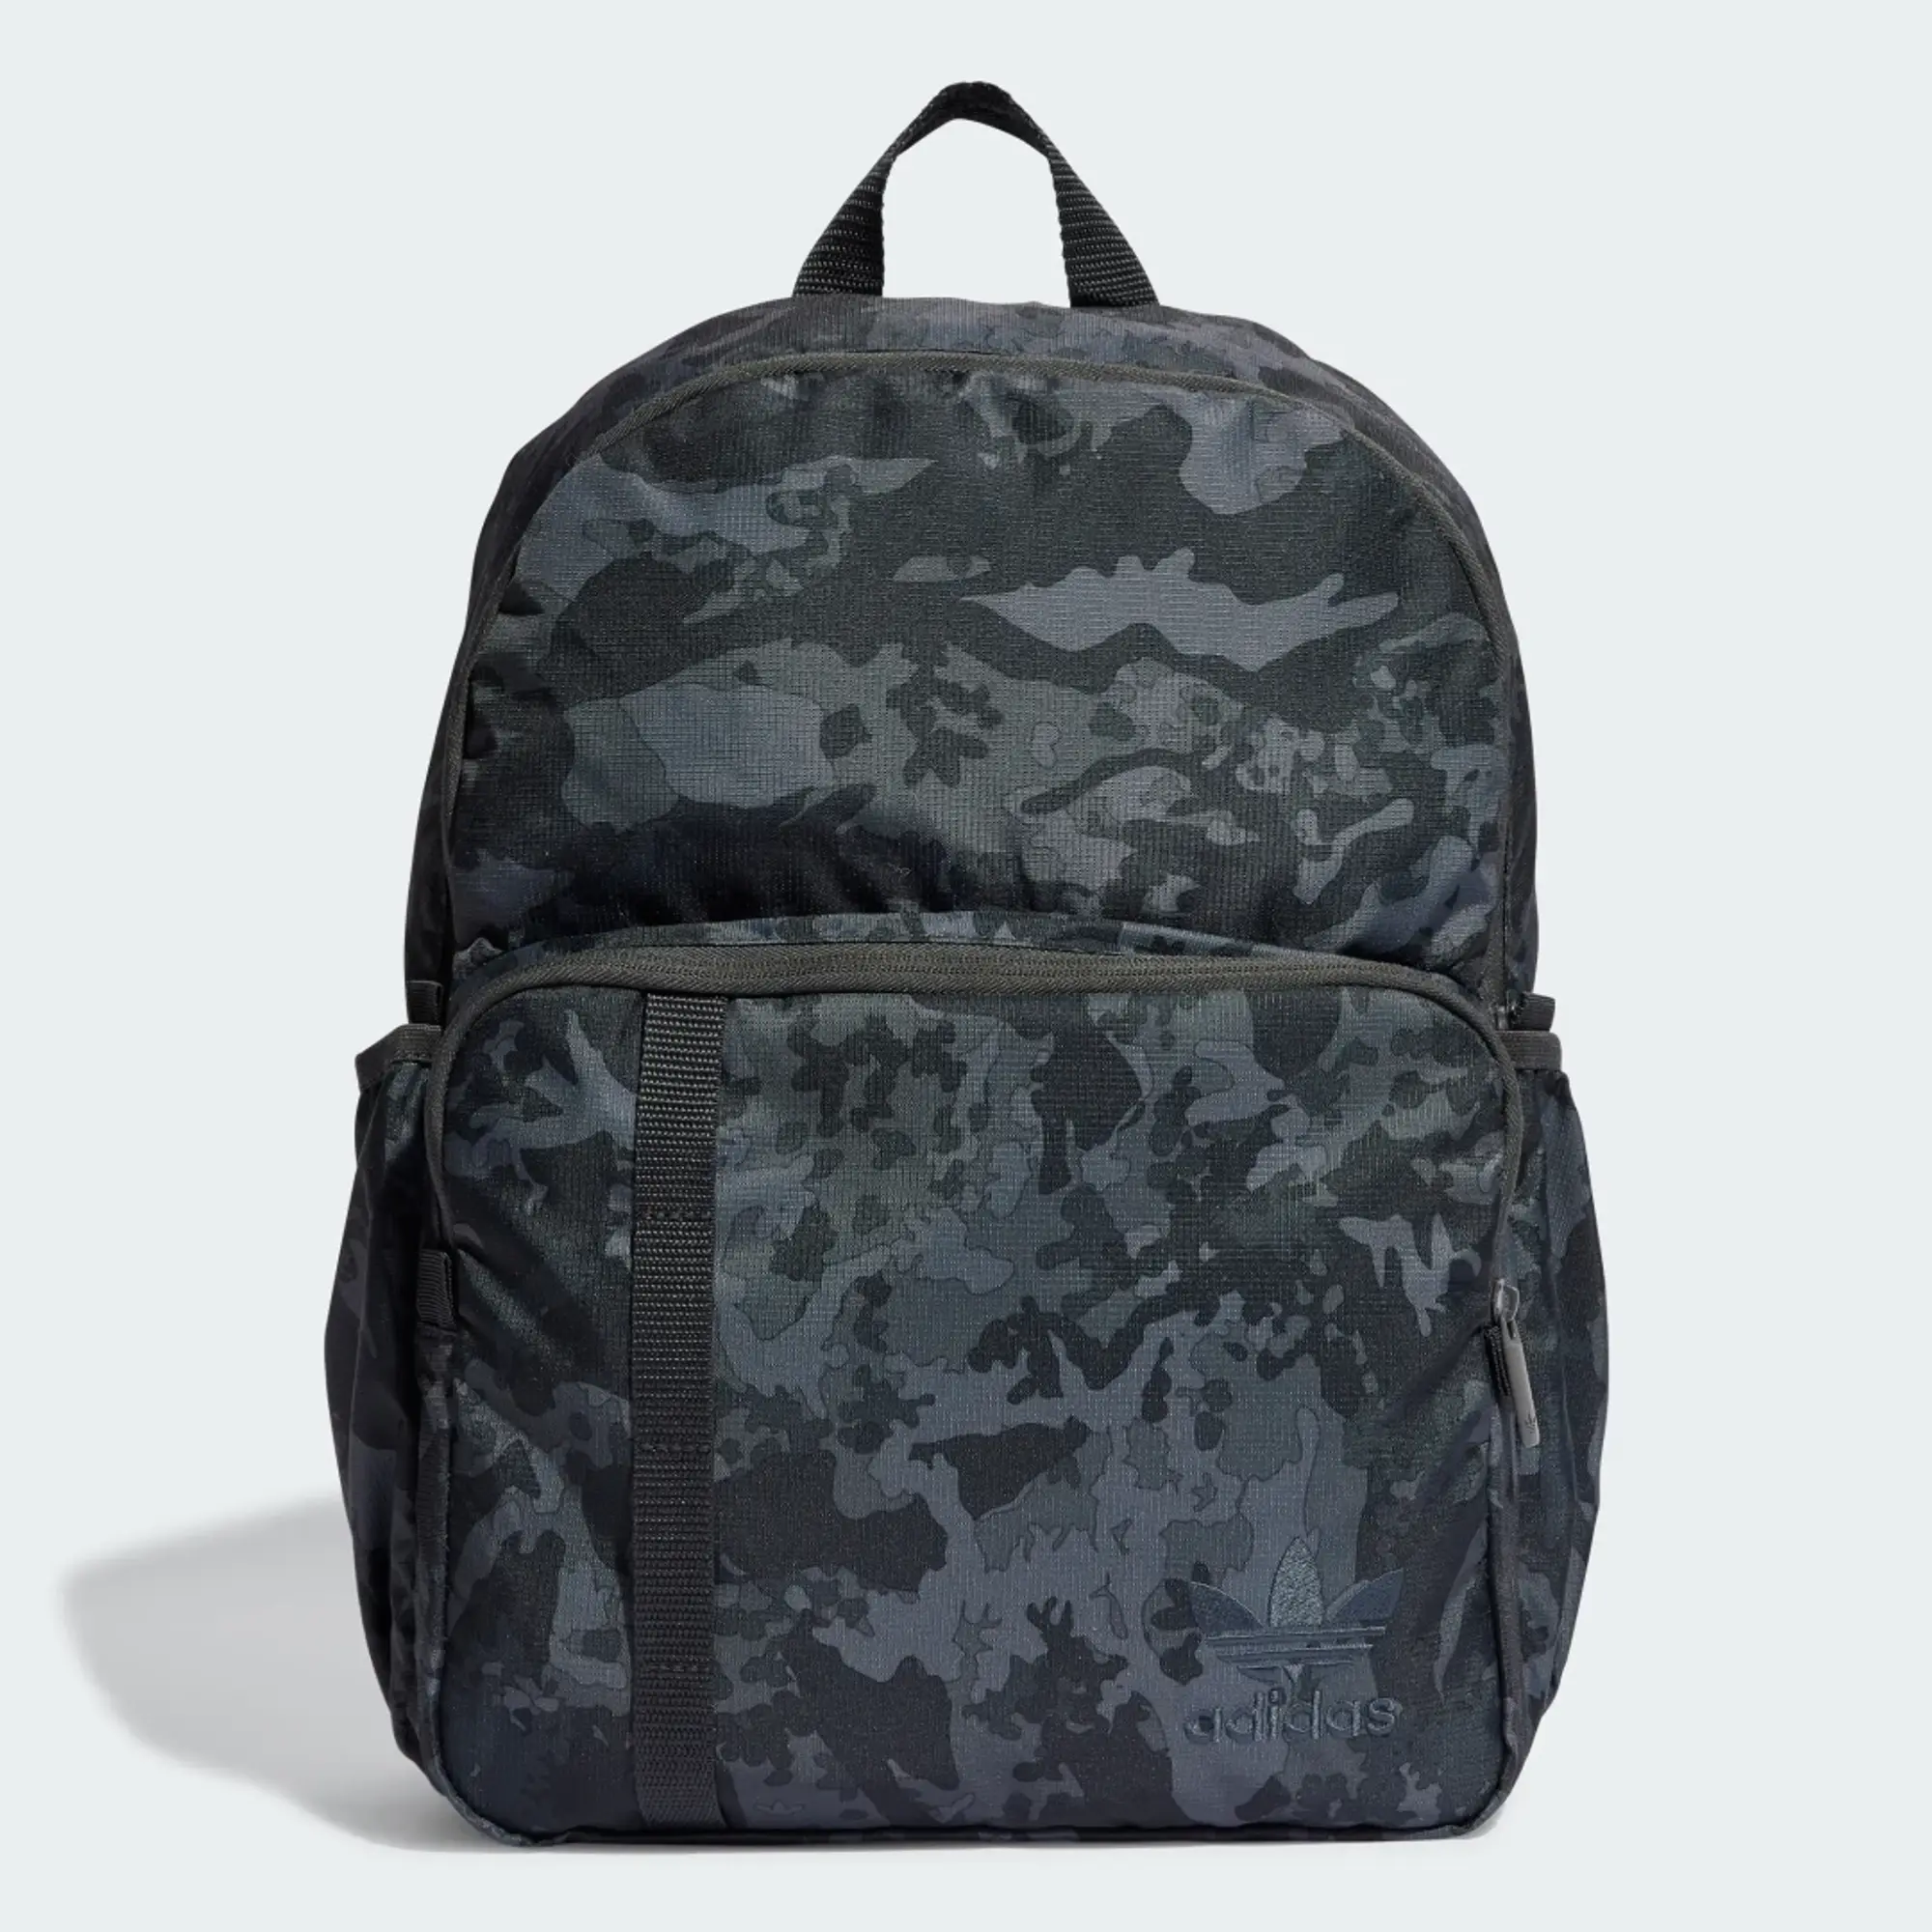 Adidas Originals Camo Backpack In Black And Grey